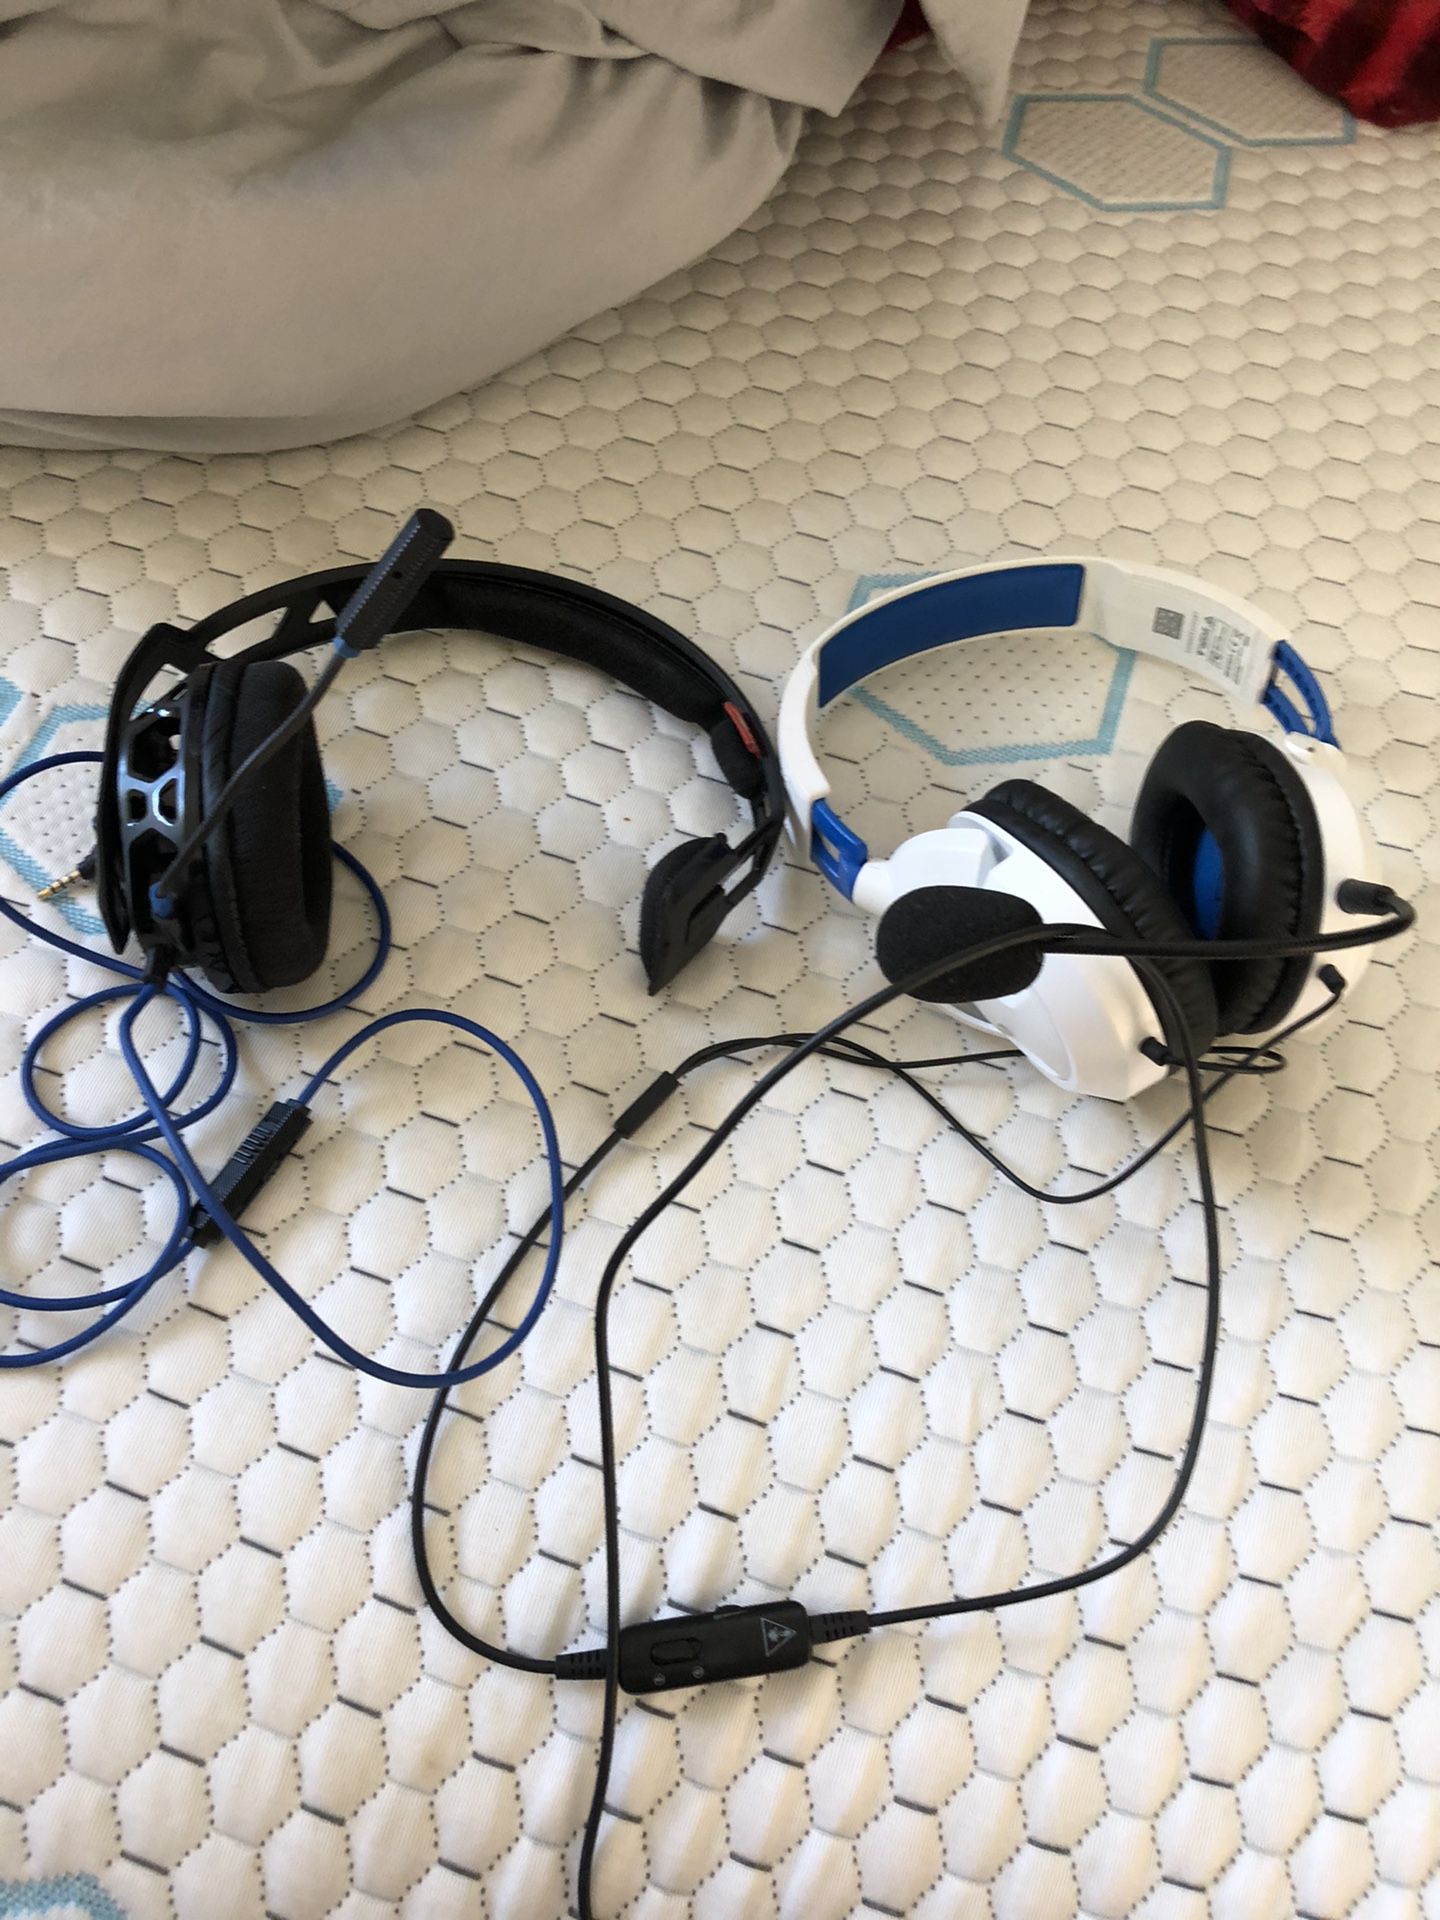 2 Gaming headphones